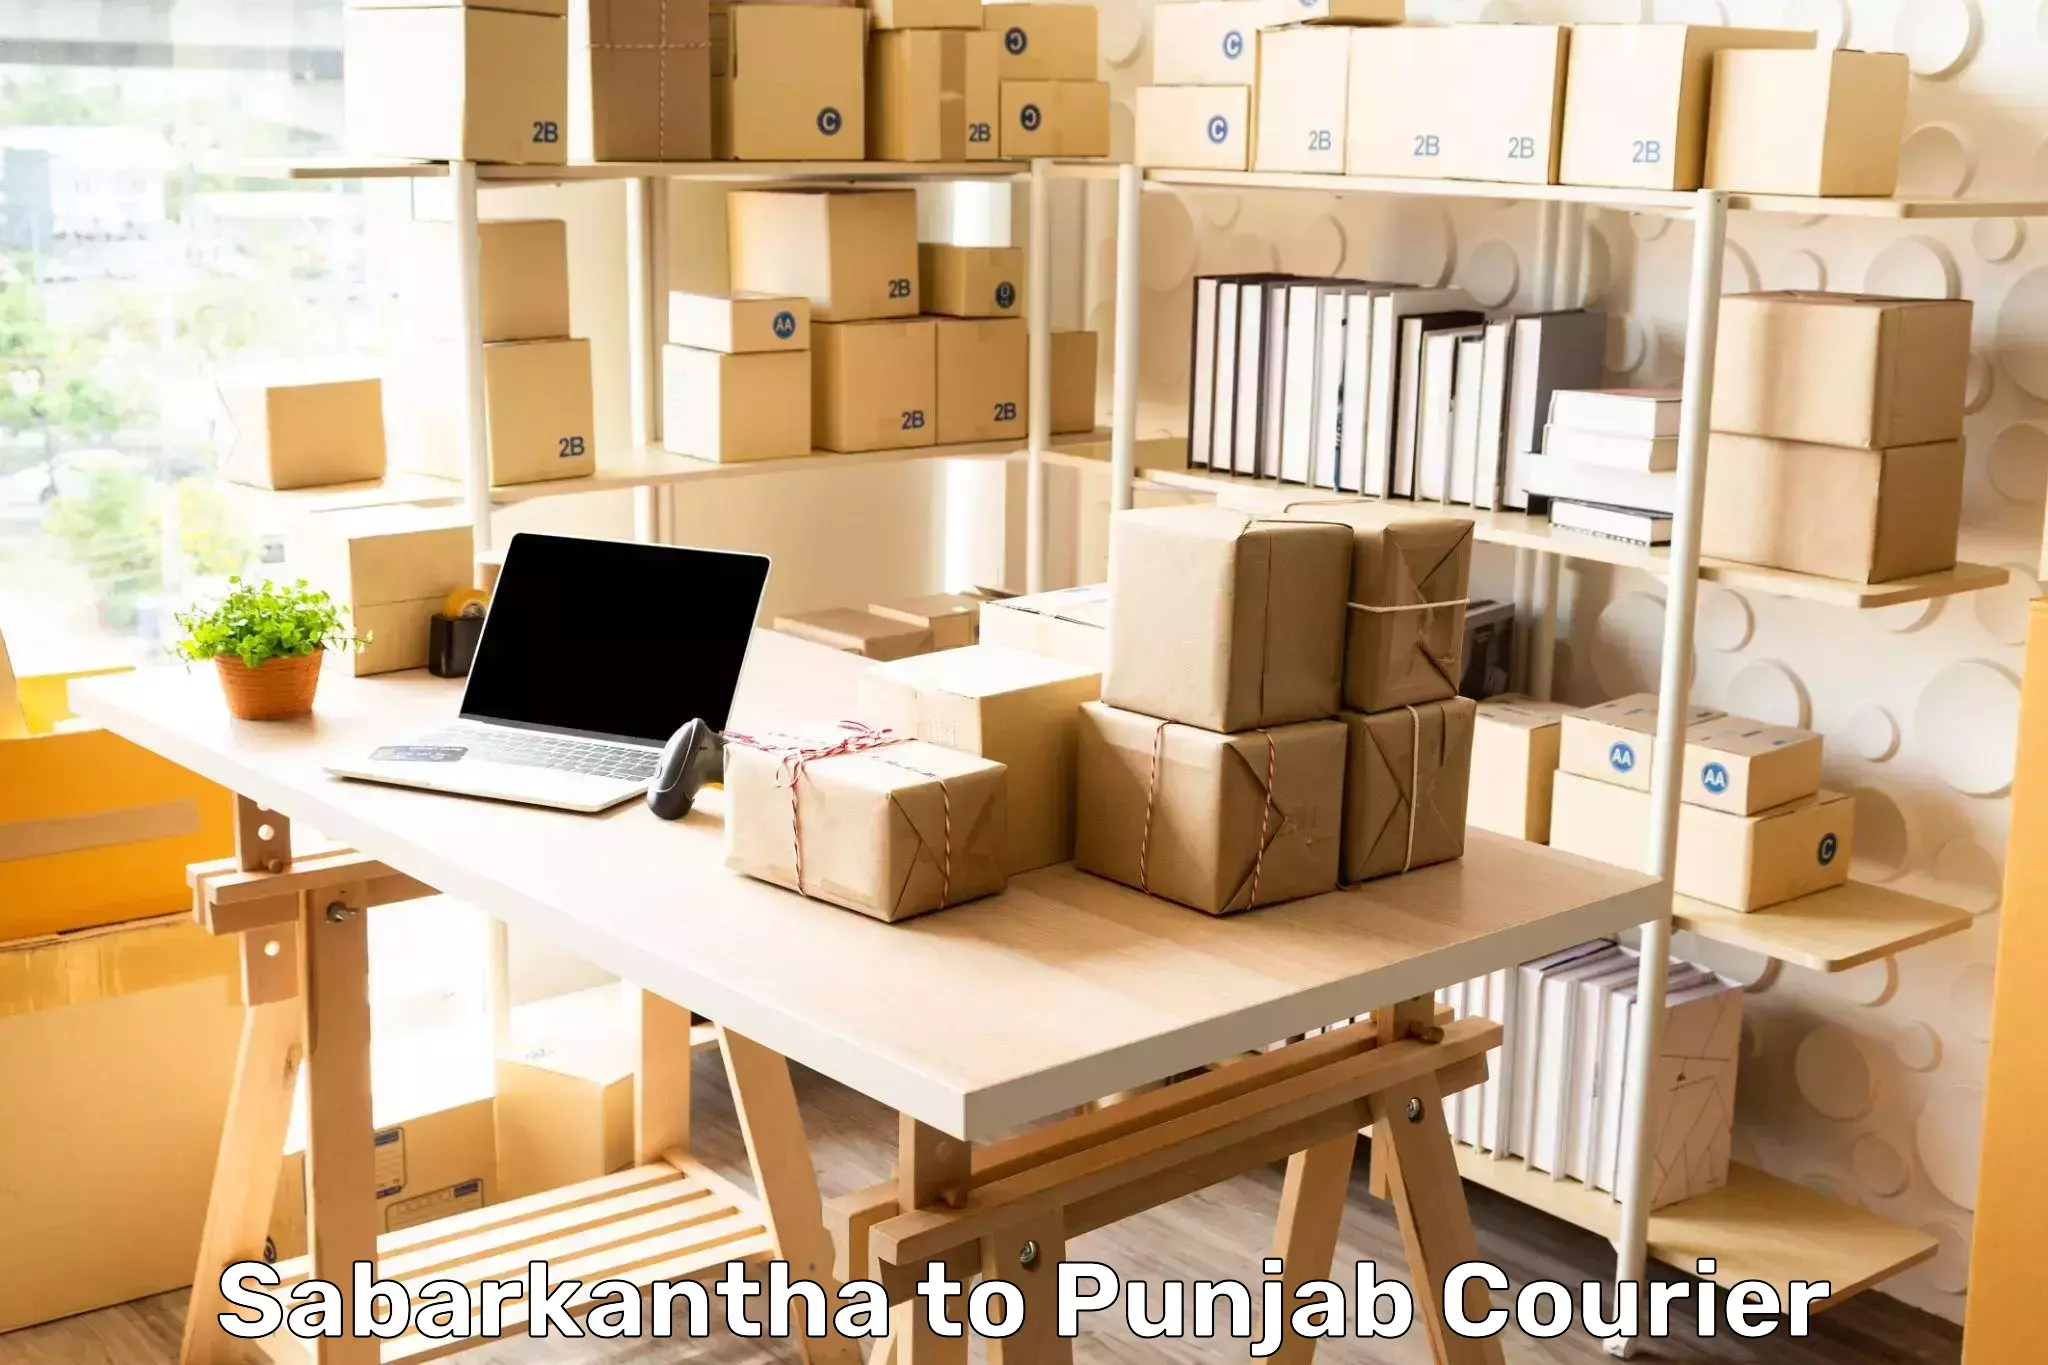 Professional courier handling Sabarkantha to Zirakpur